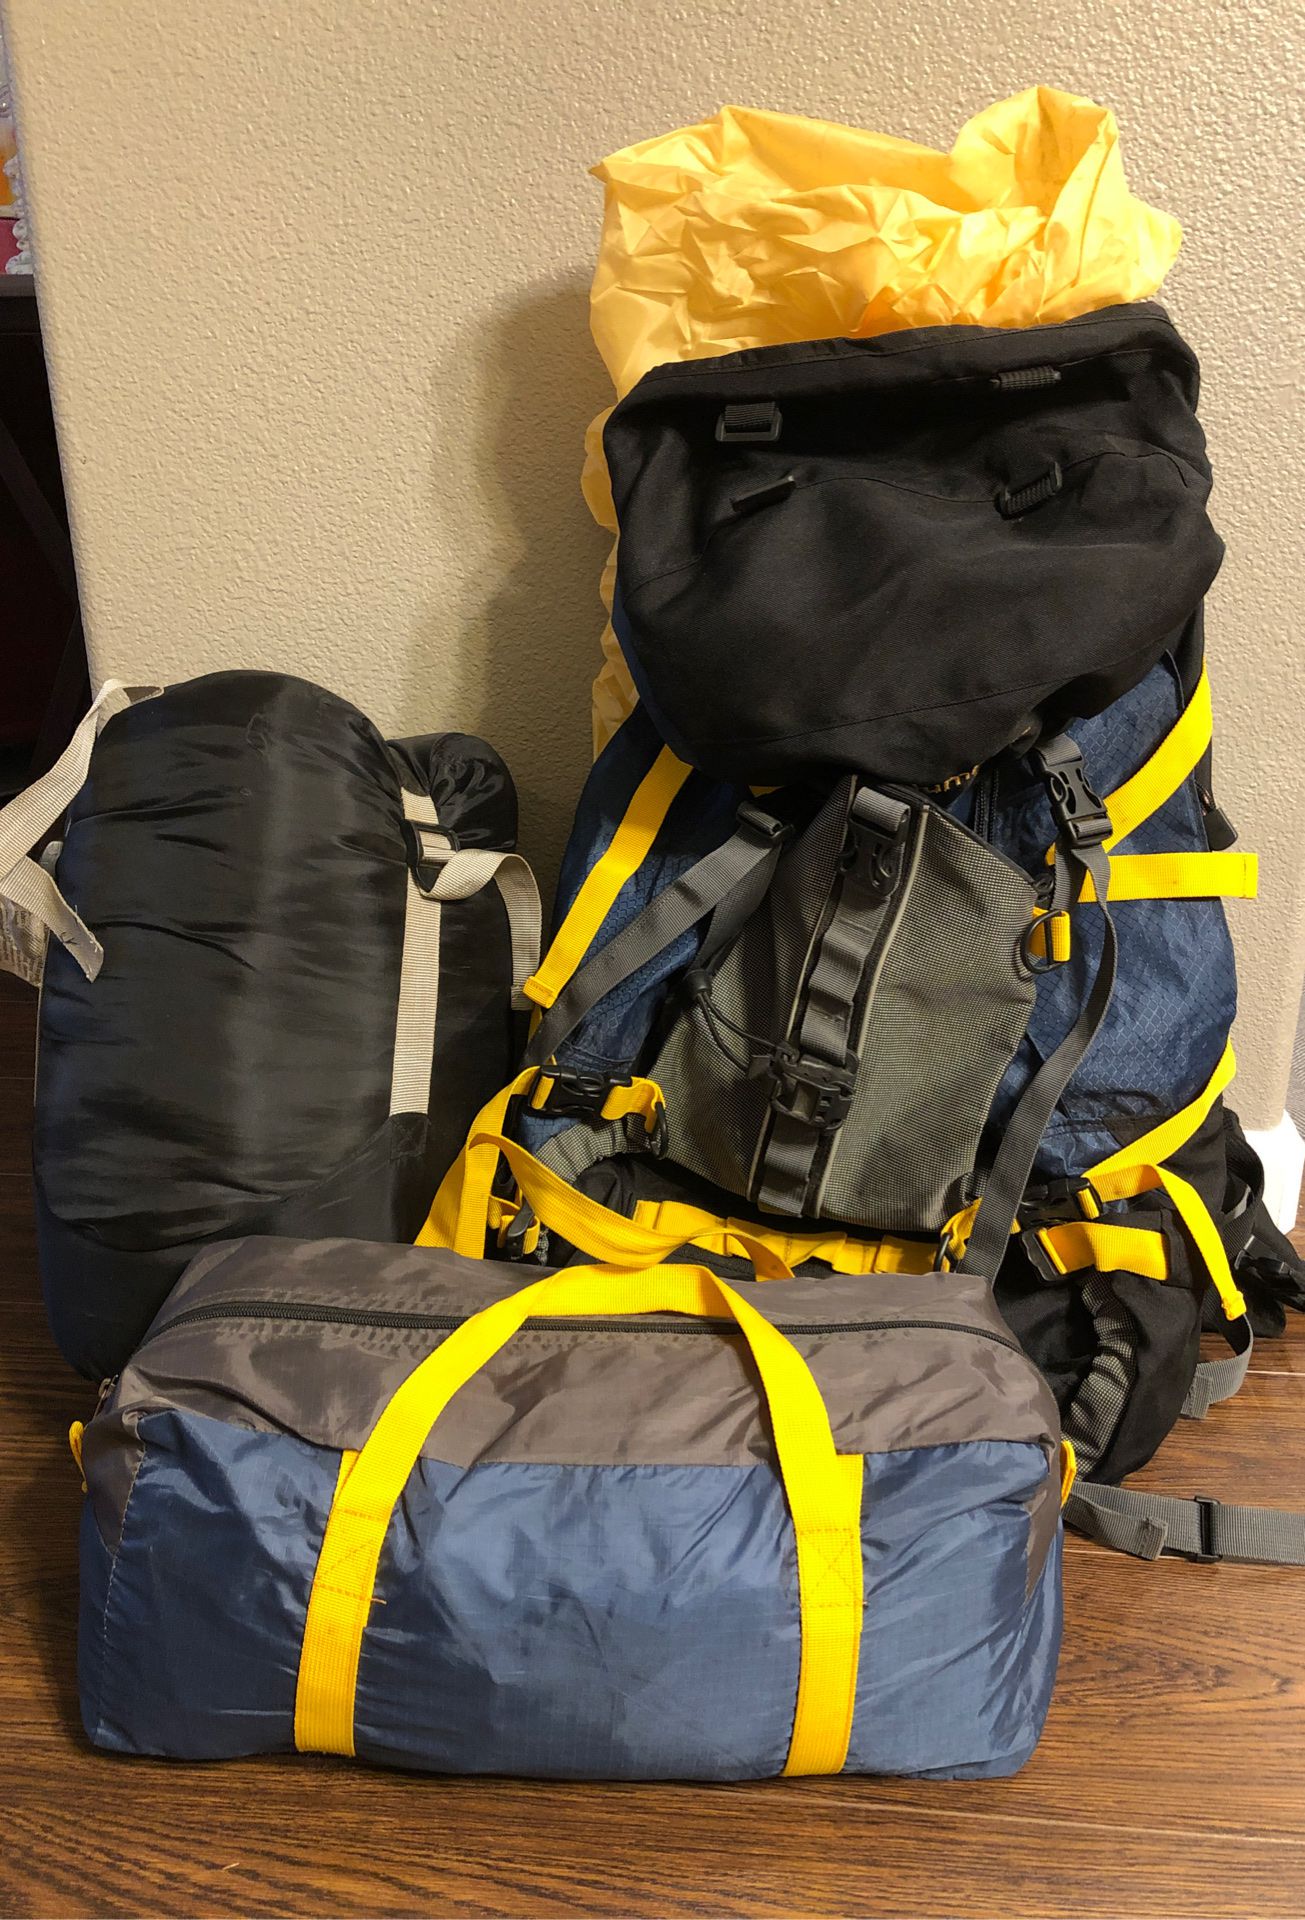 Hiking backpack, tent & sleeping bag